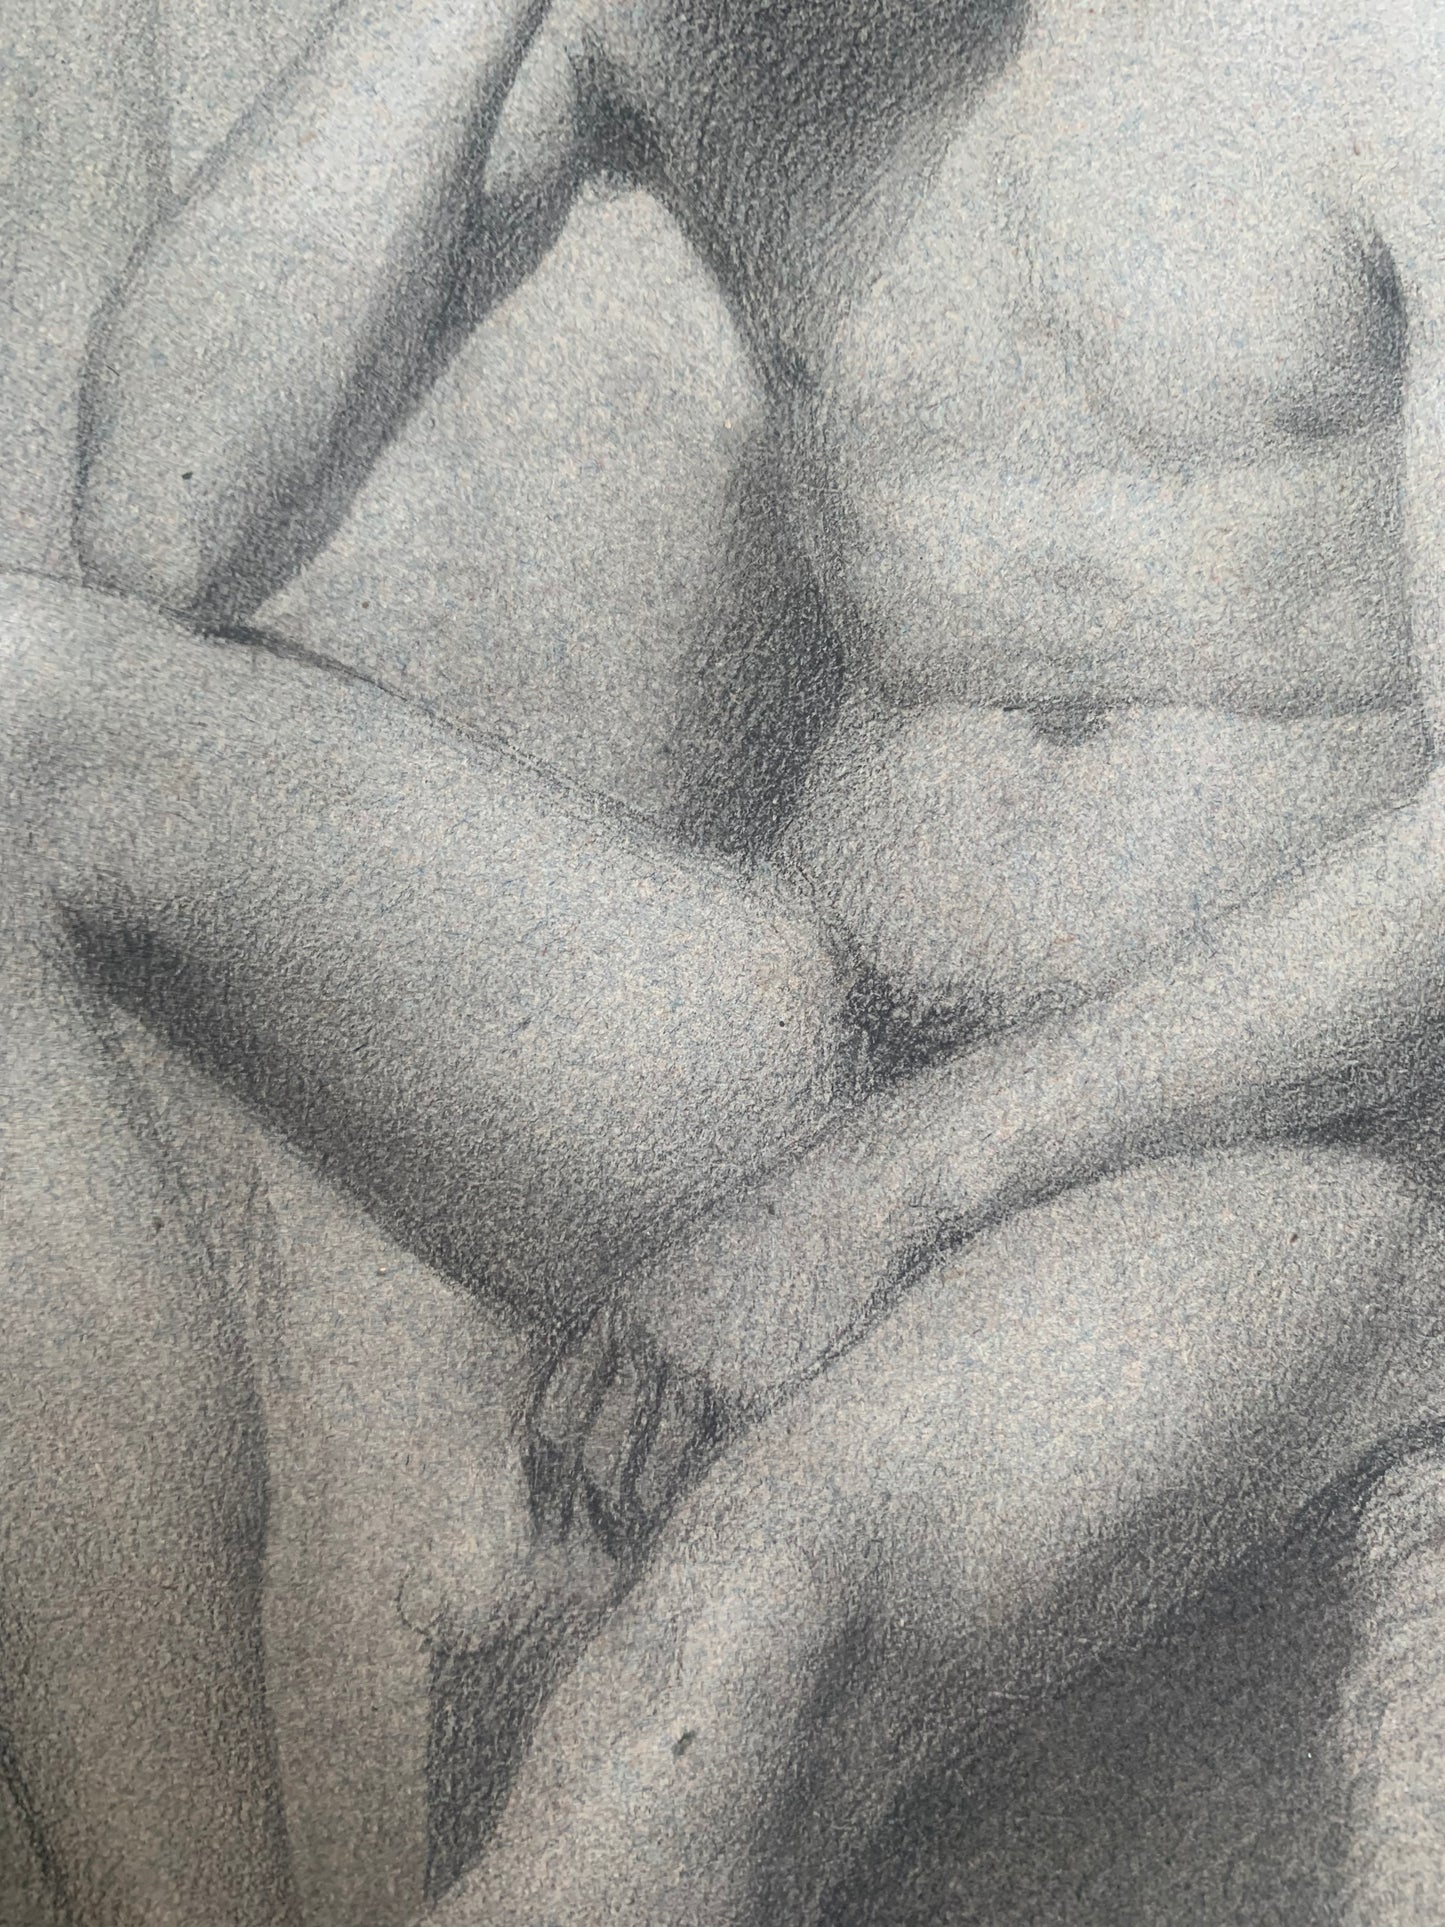 Academic Study Of Male Nude. Second Half Of XIX Century